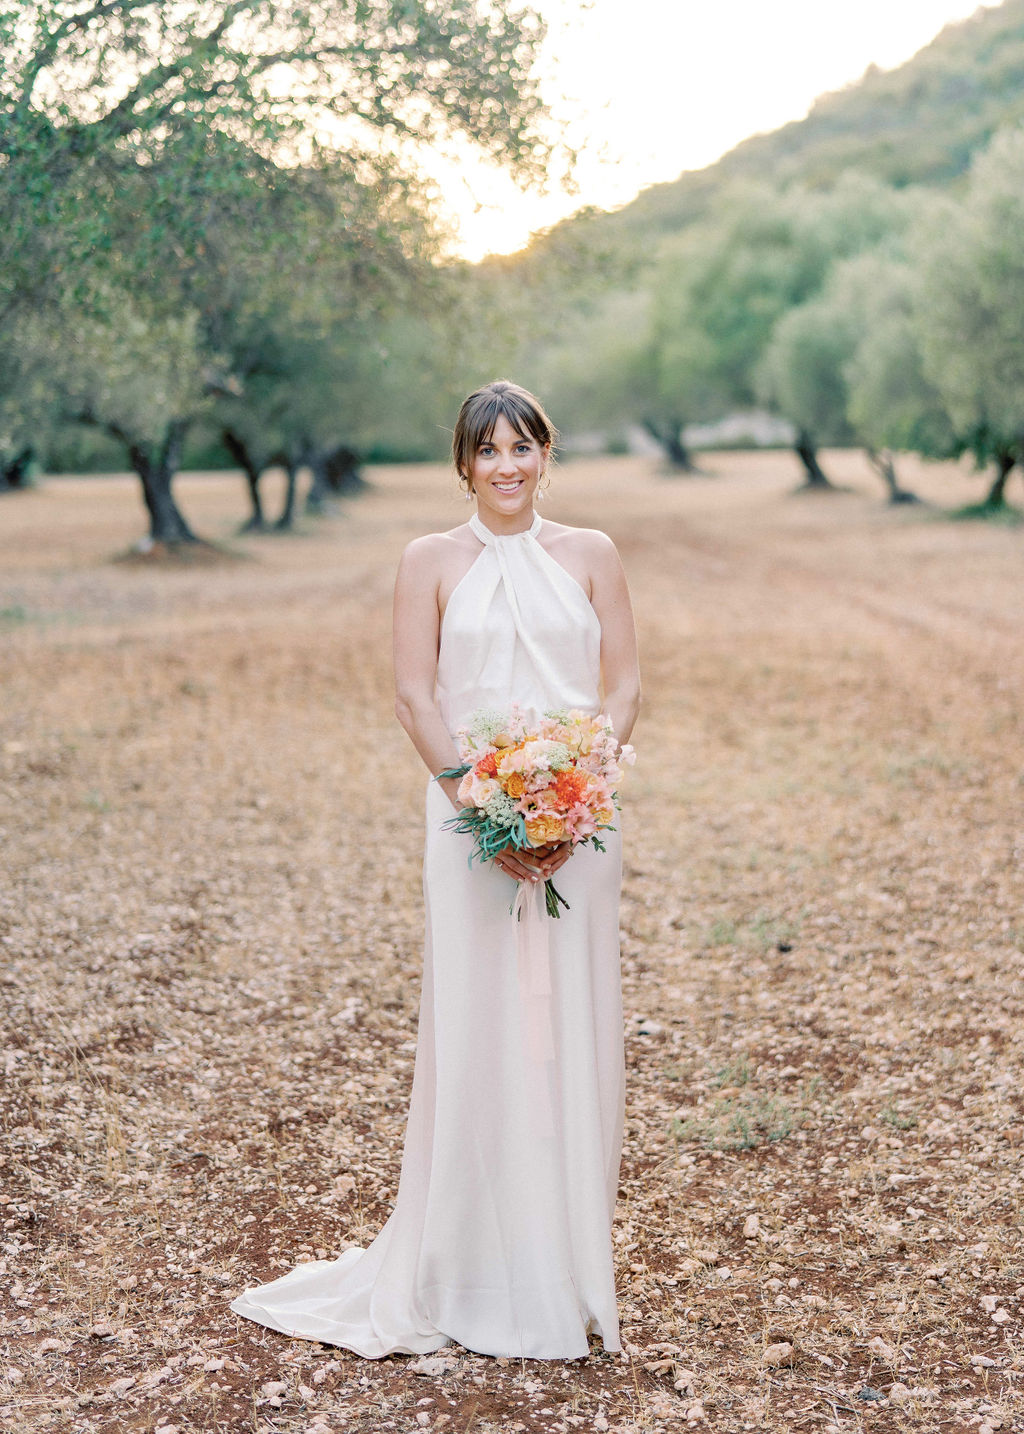 Olive Grove Wedding In Greece - Bride